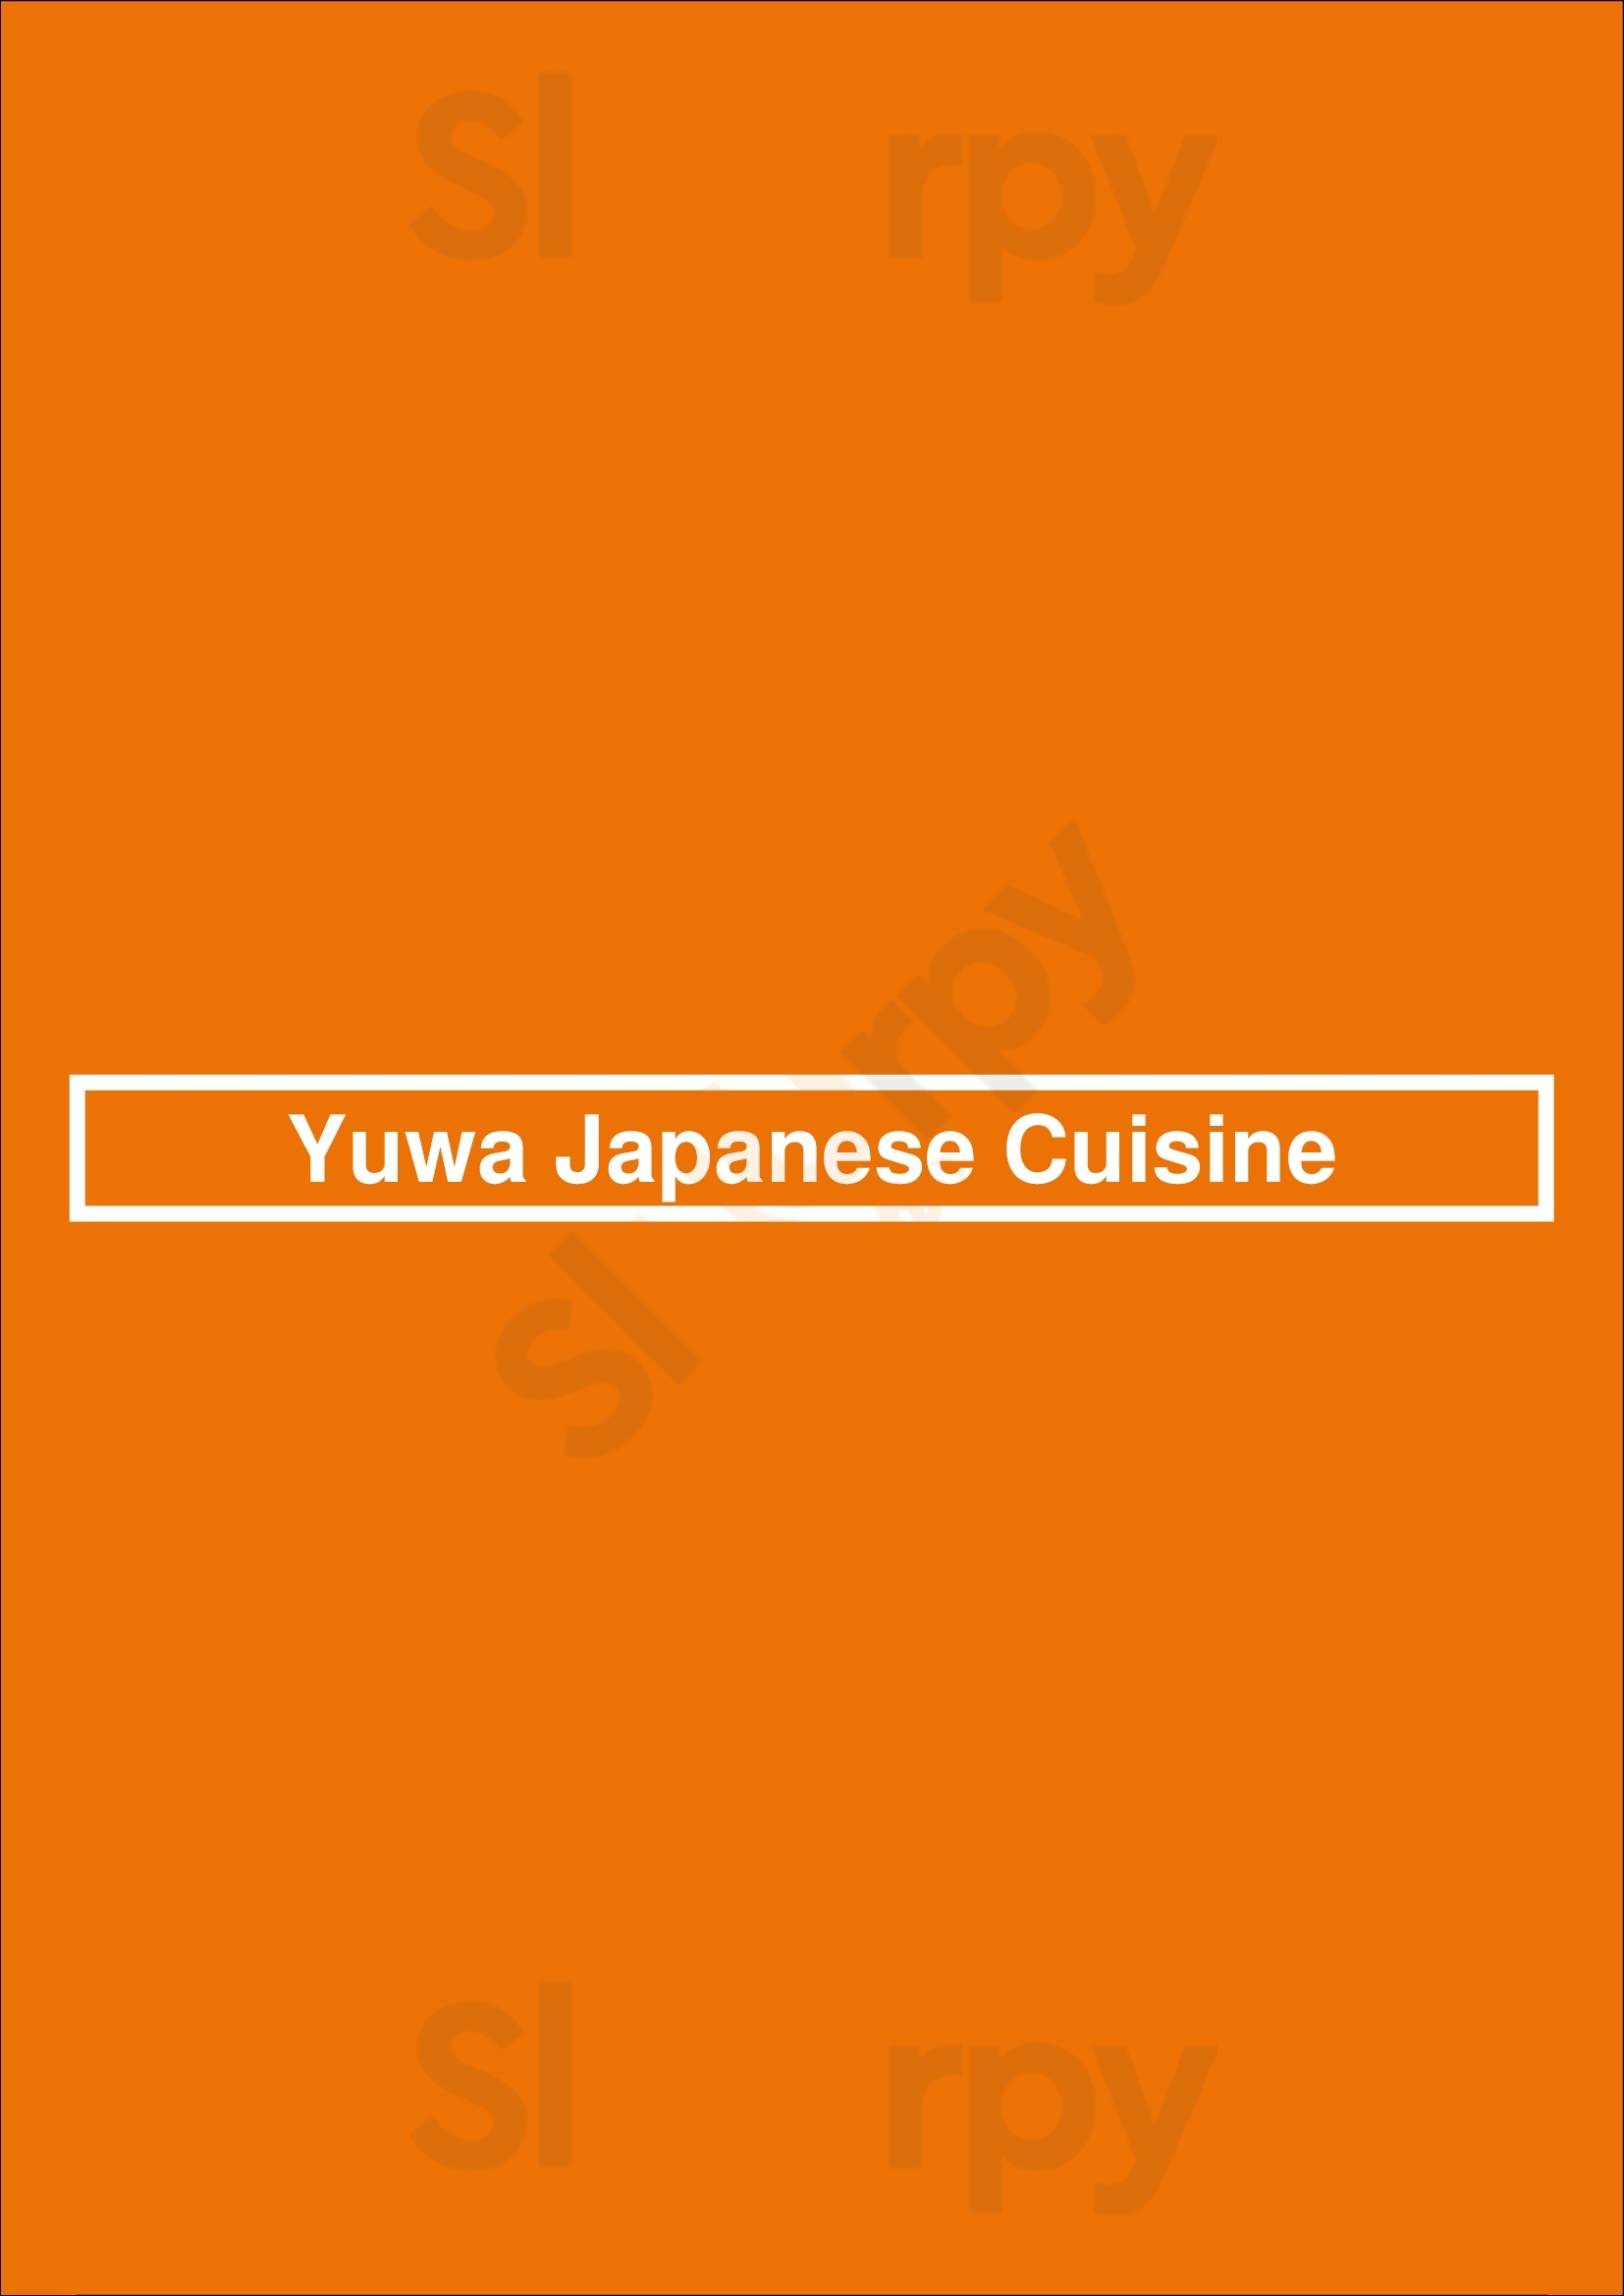 Yuwa Japanese Cuisine Vancouver Menu - 1